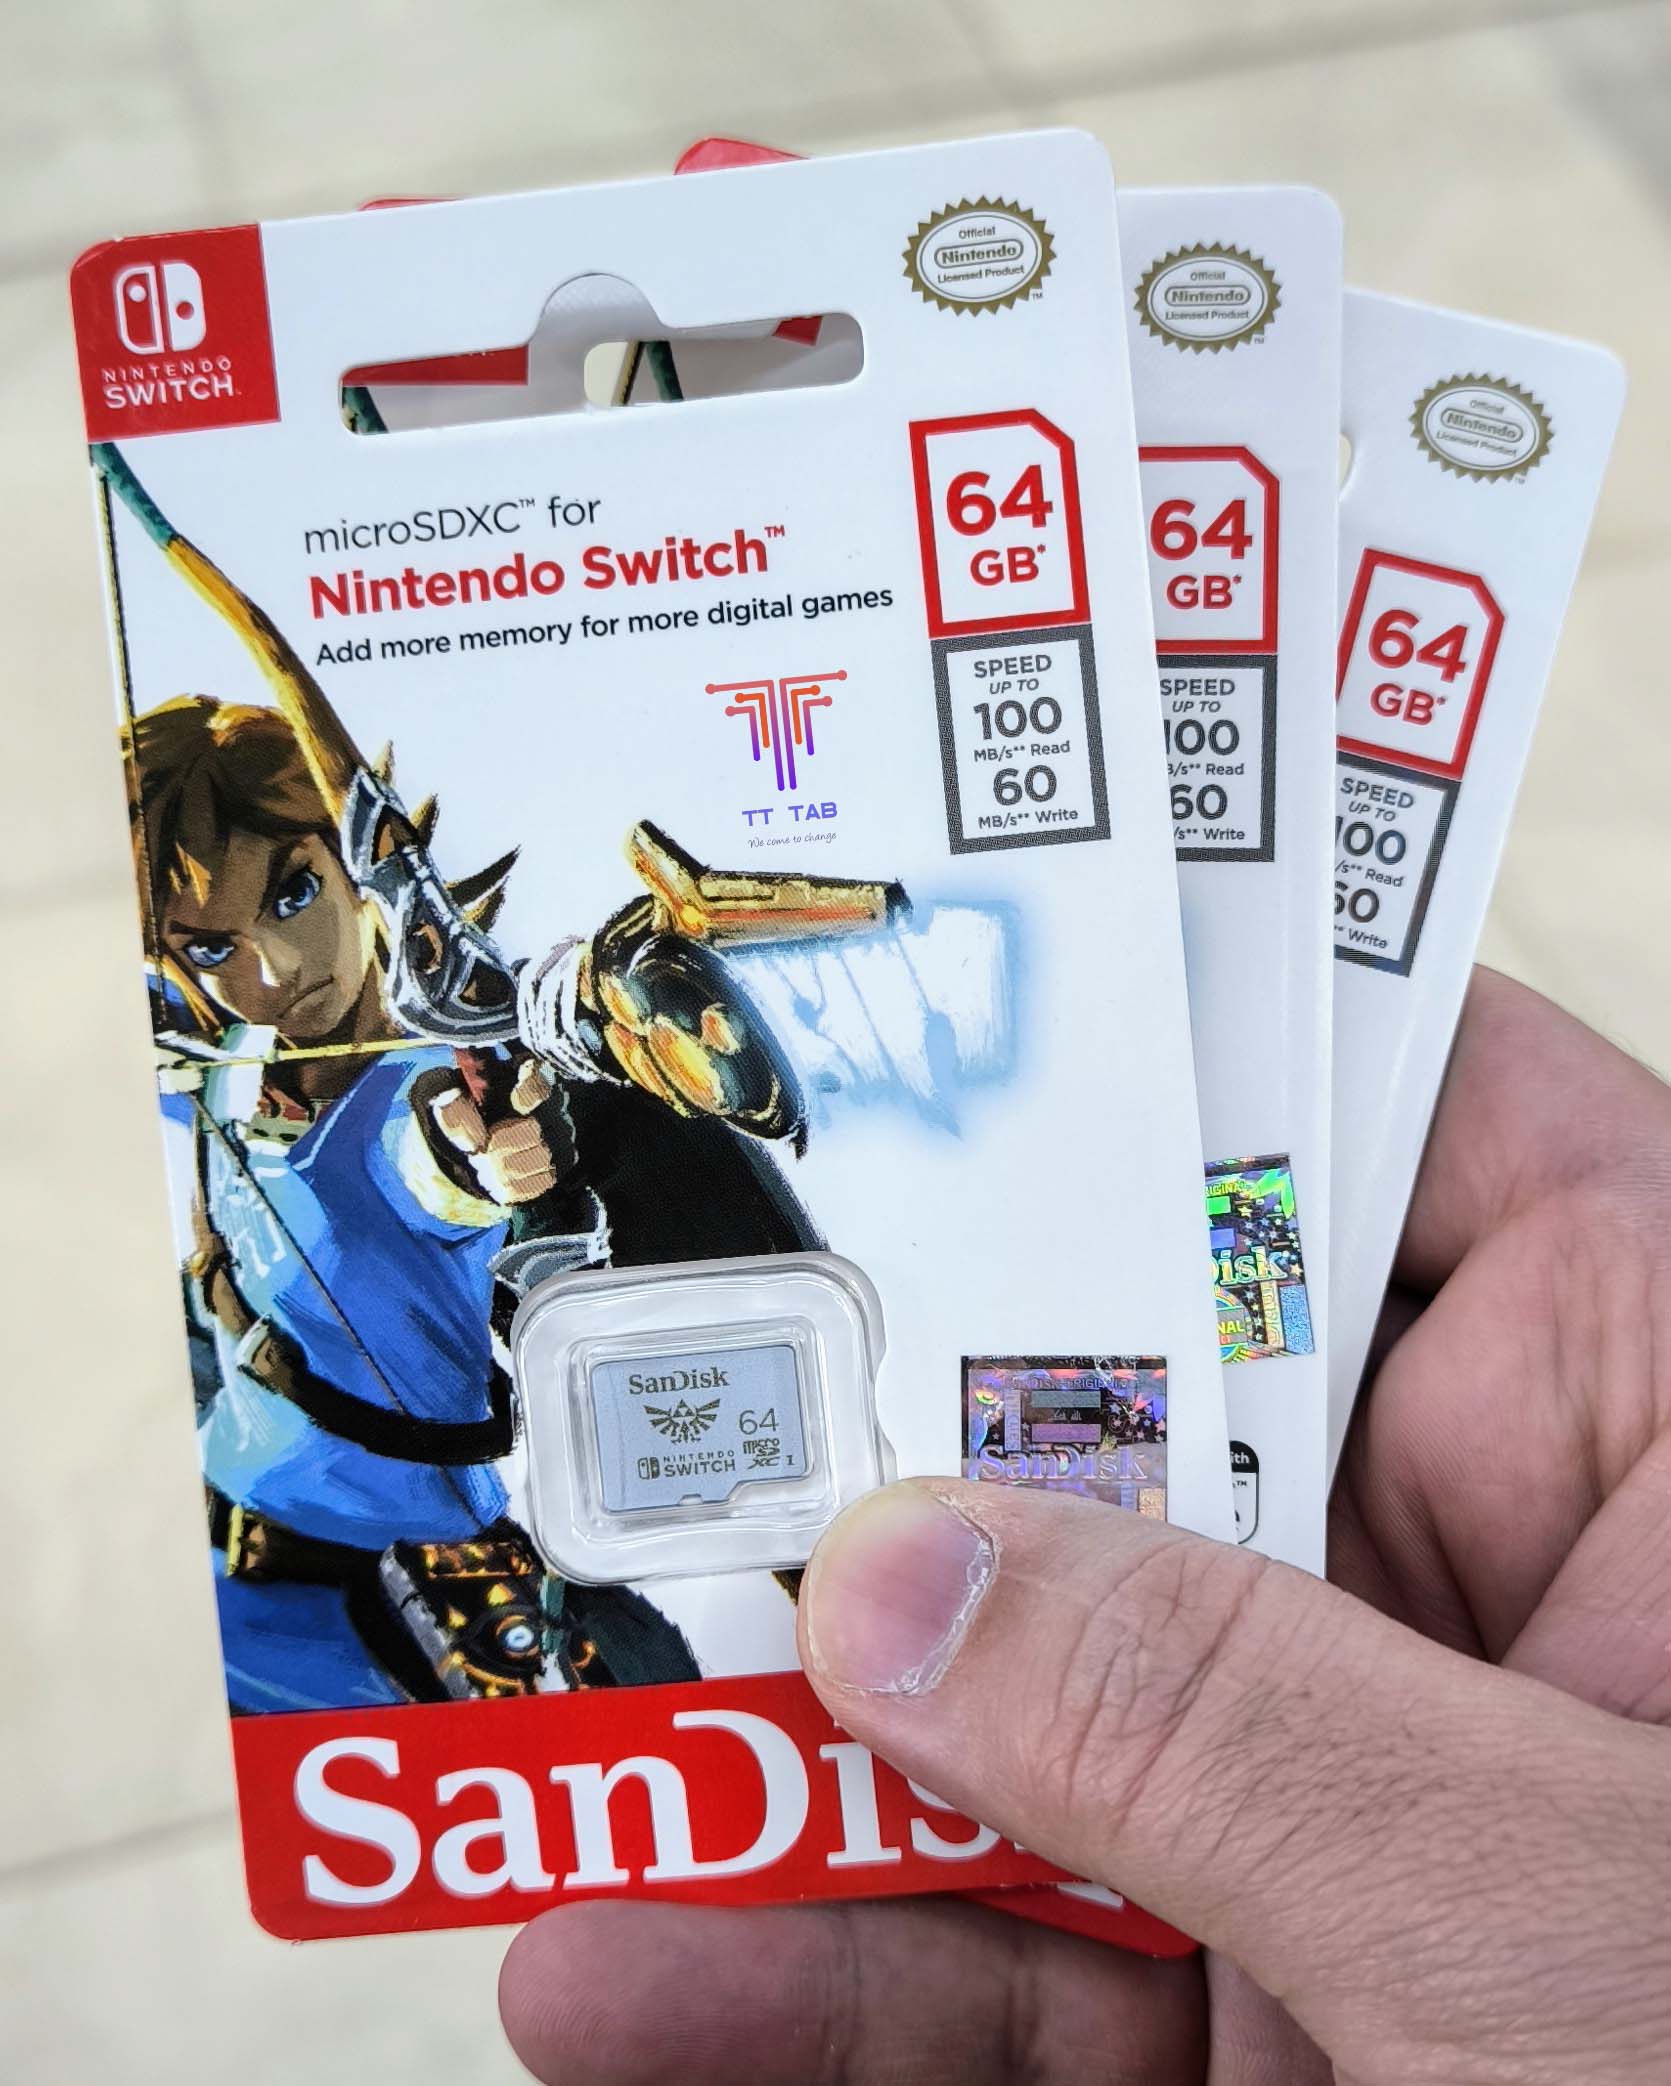 SanDisk Micro SDXC for Nintendo Switch